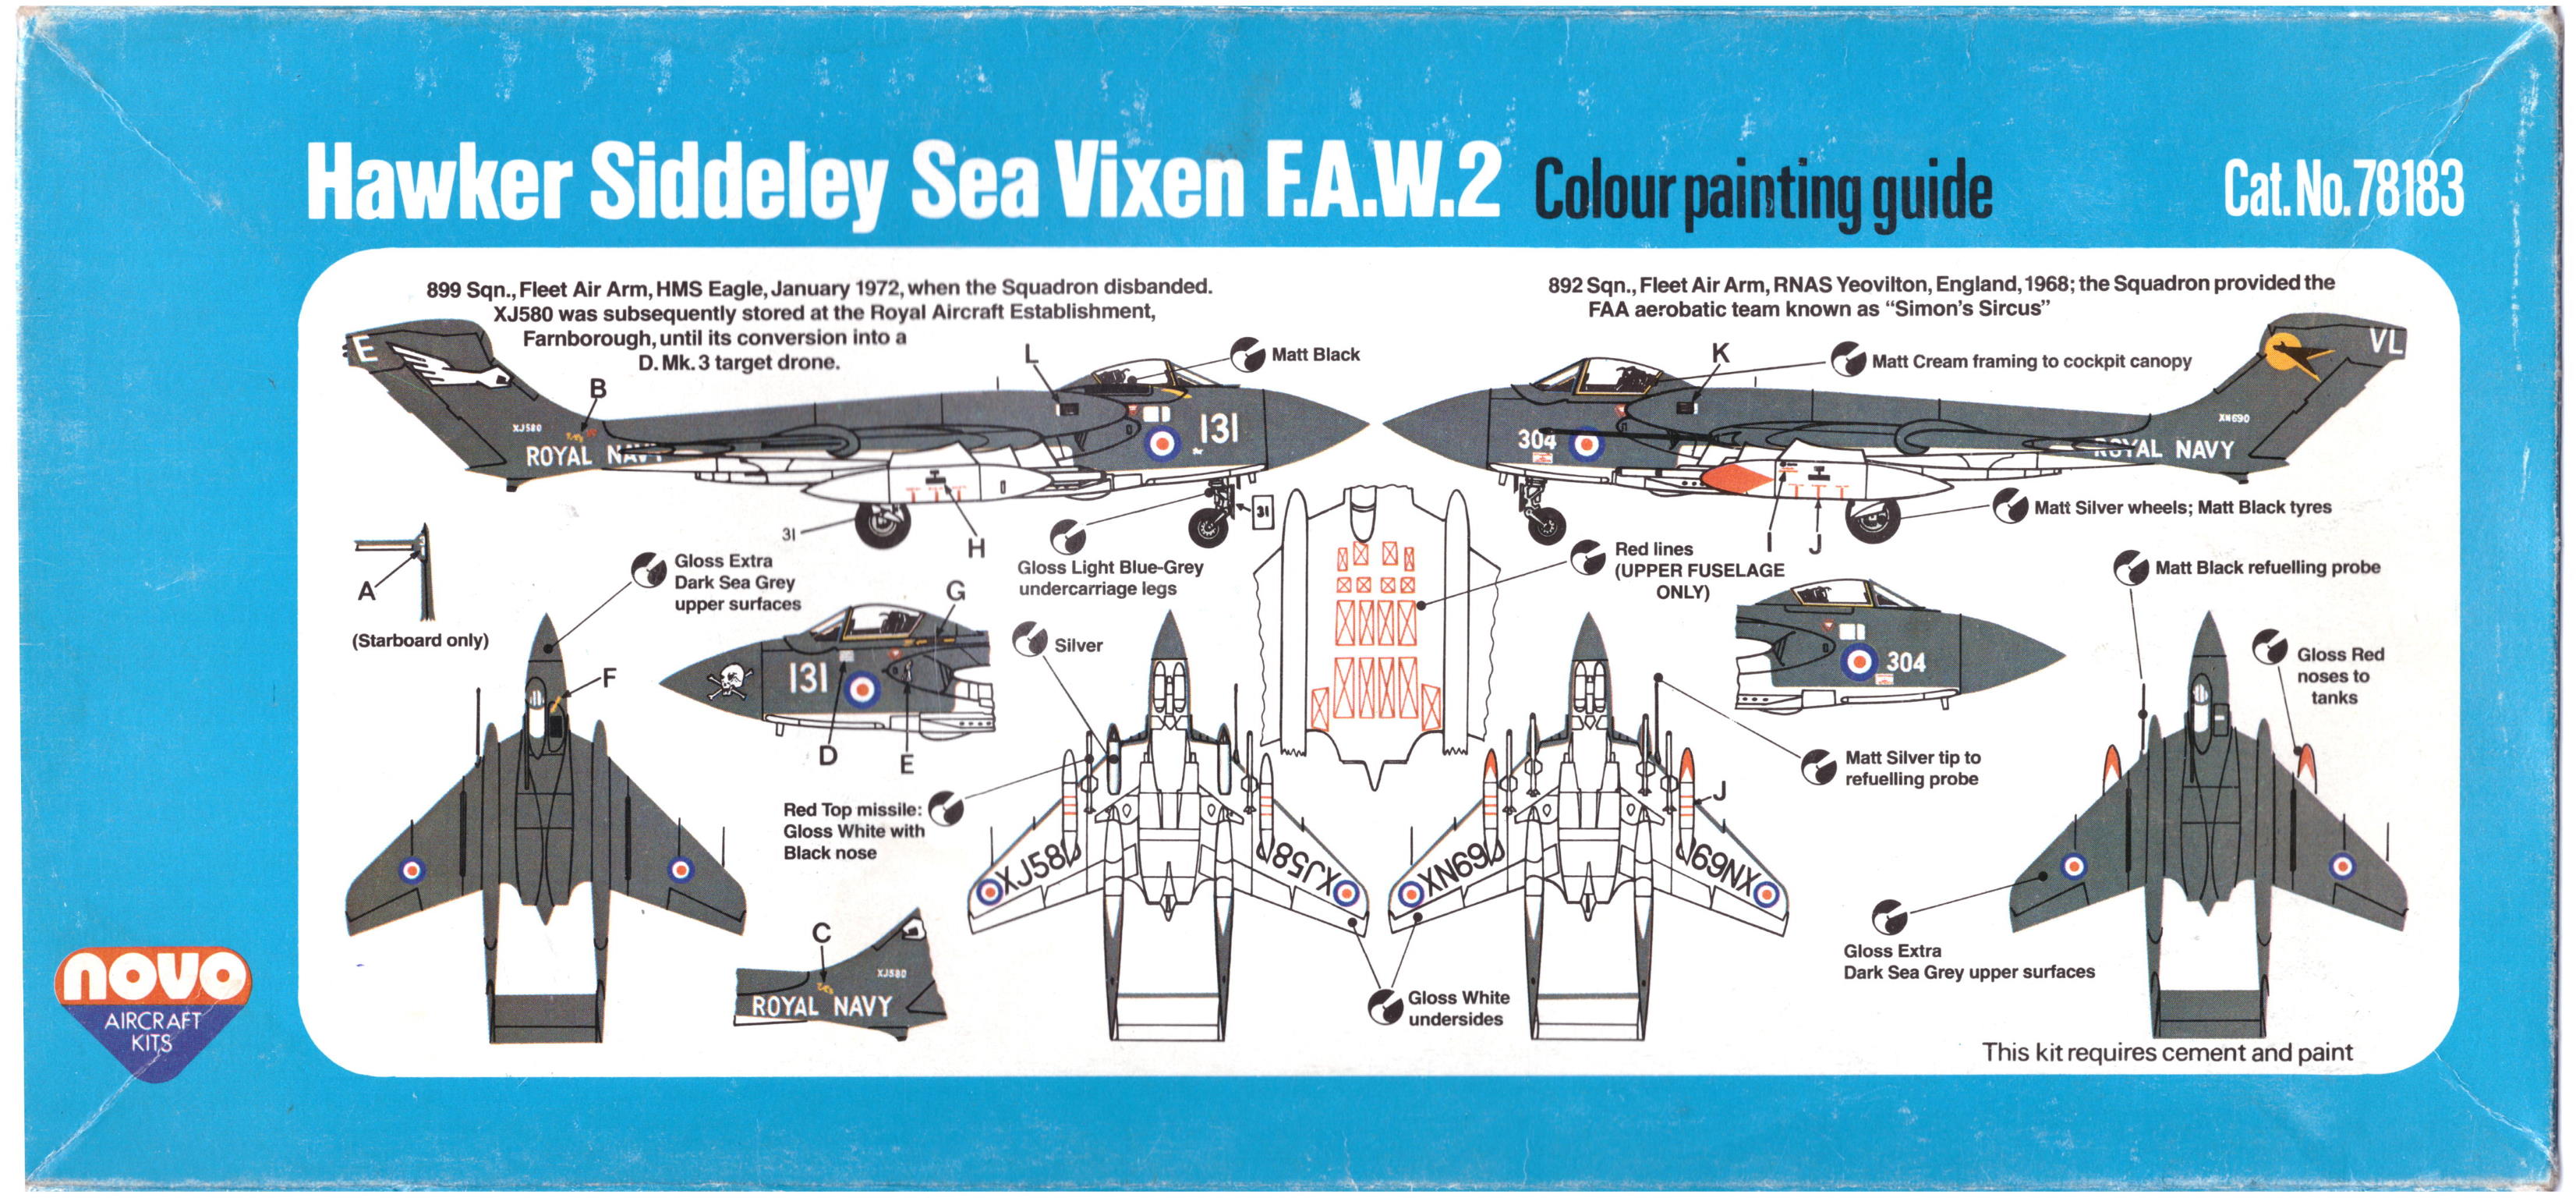 Руководство по окраске NOVO F409 Hawker Siddeley Sea Vixen FAW.Mk.2 Strike Fighter, NOVO Toys Ltd Cat.No.78054 на нижней части коробки